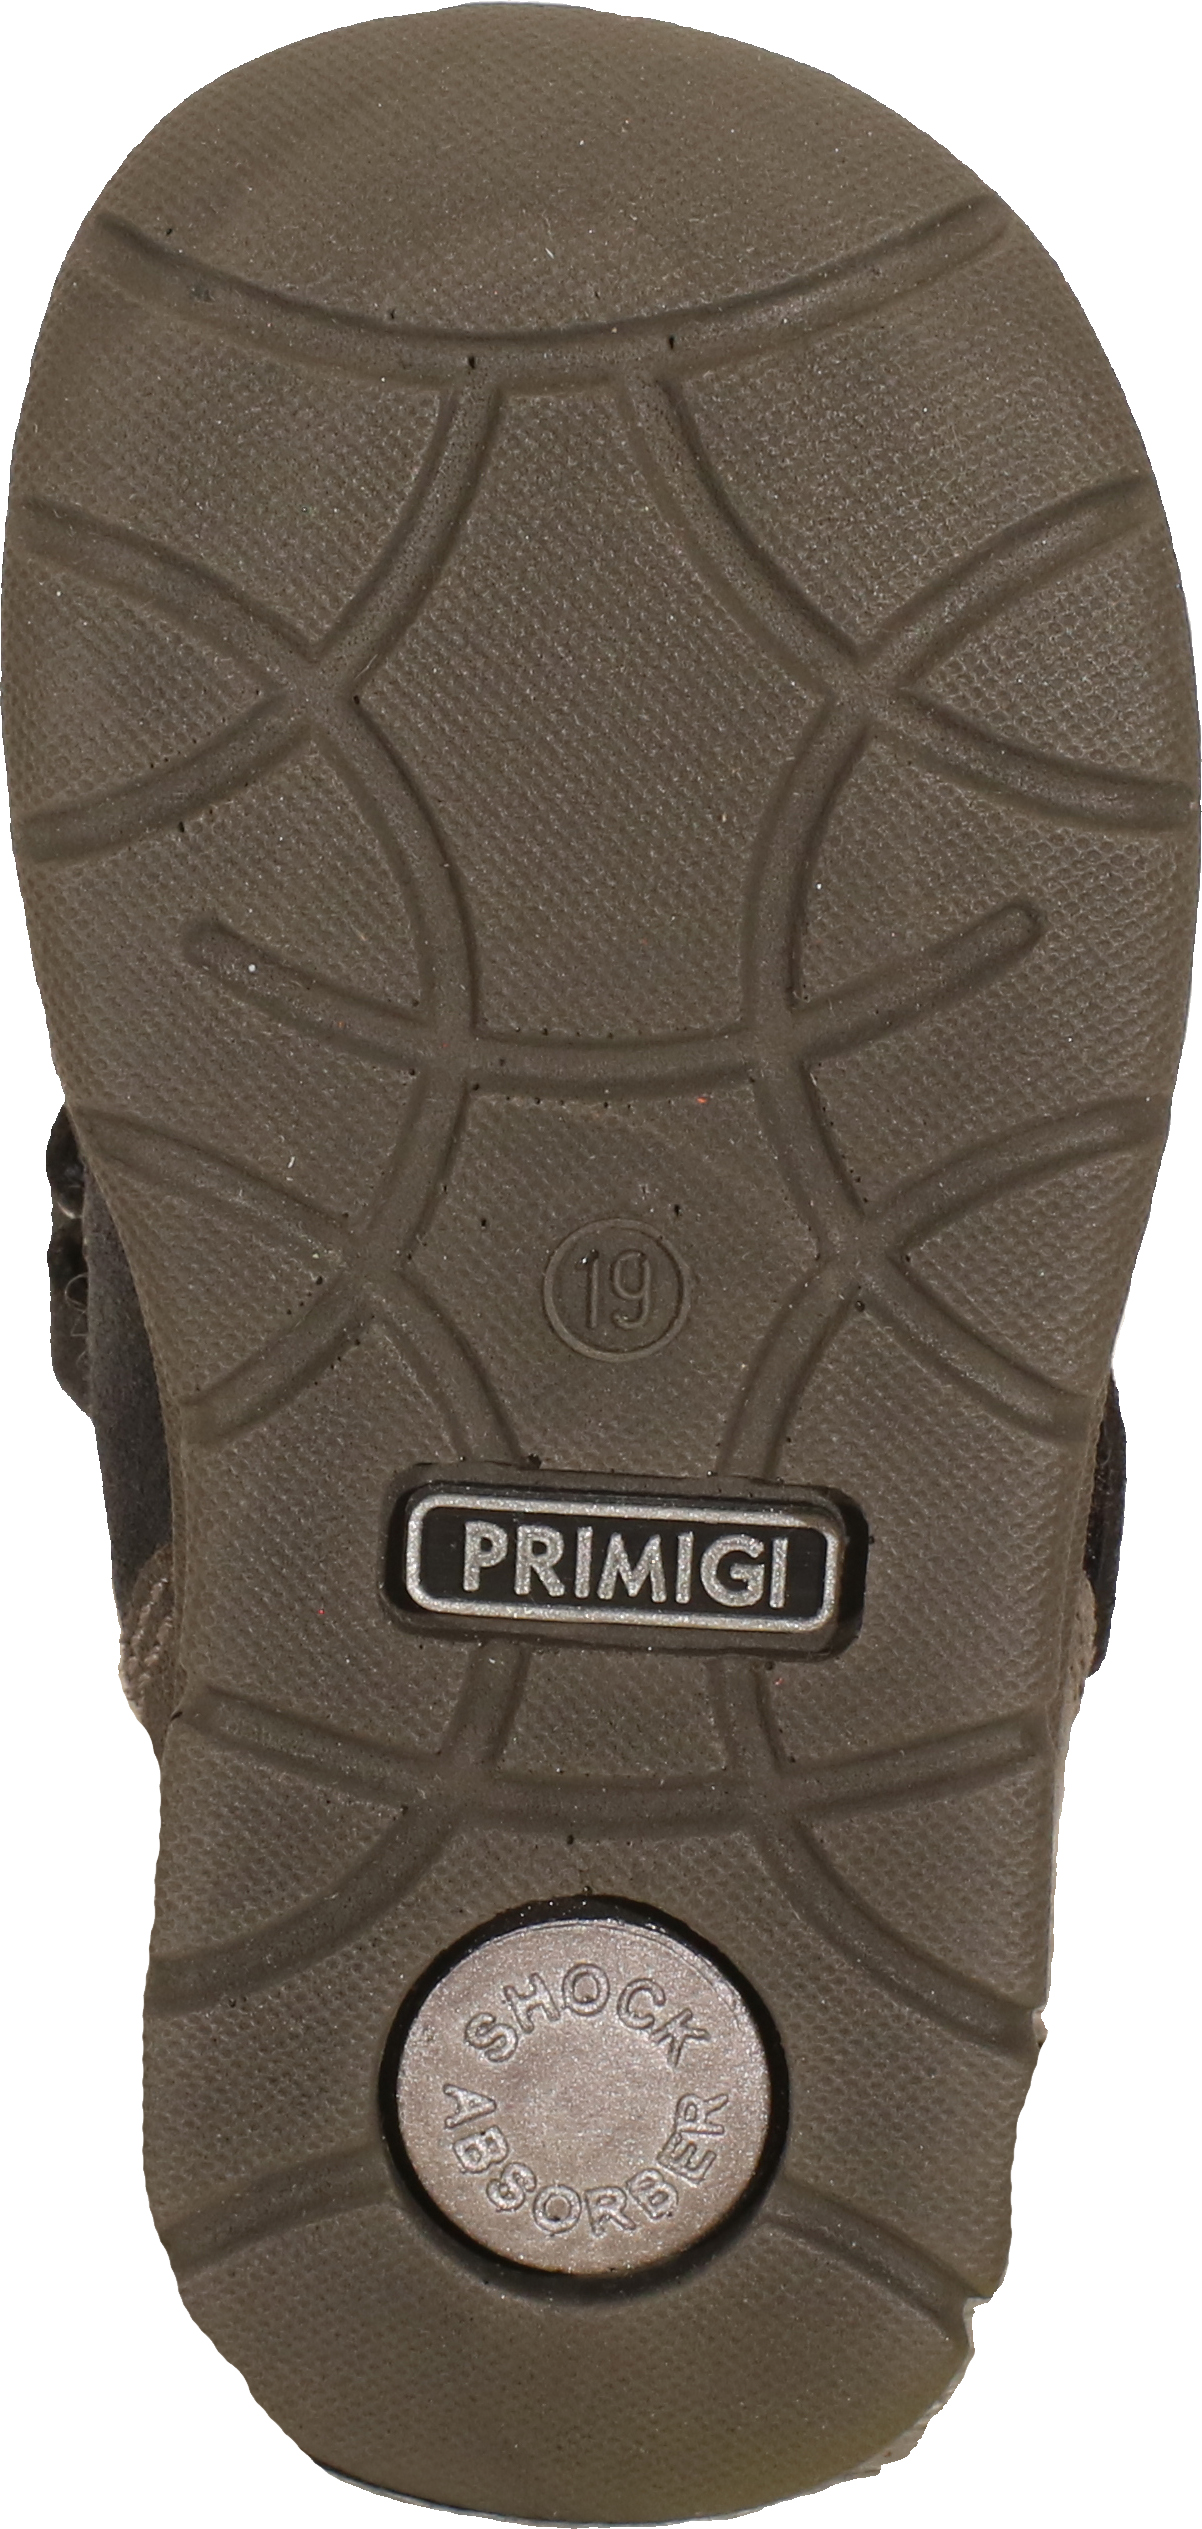 Primigi Pkkgt 83528 - Brown / Dark grey suede leather